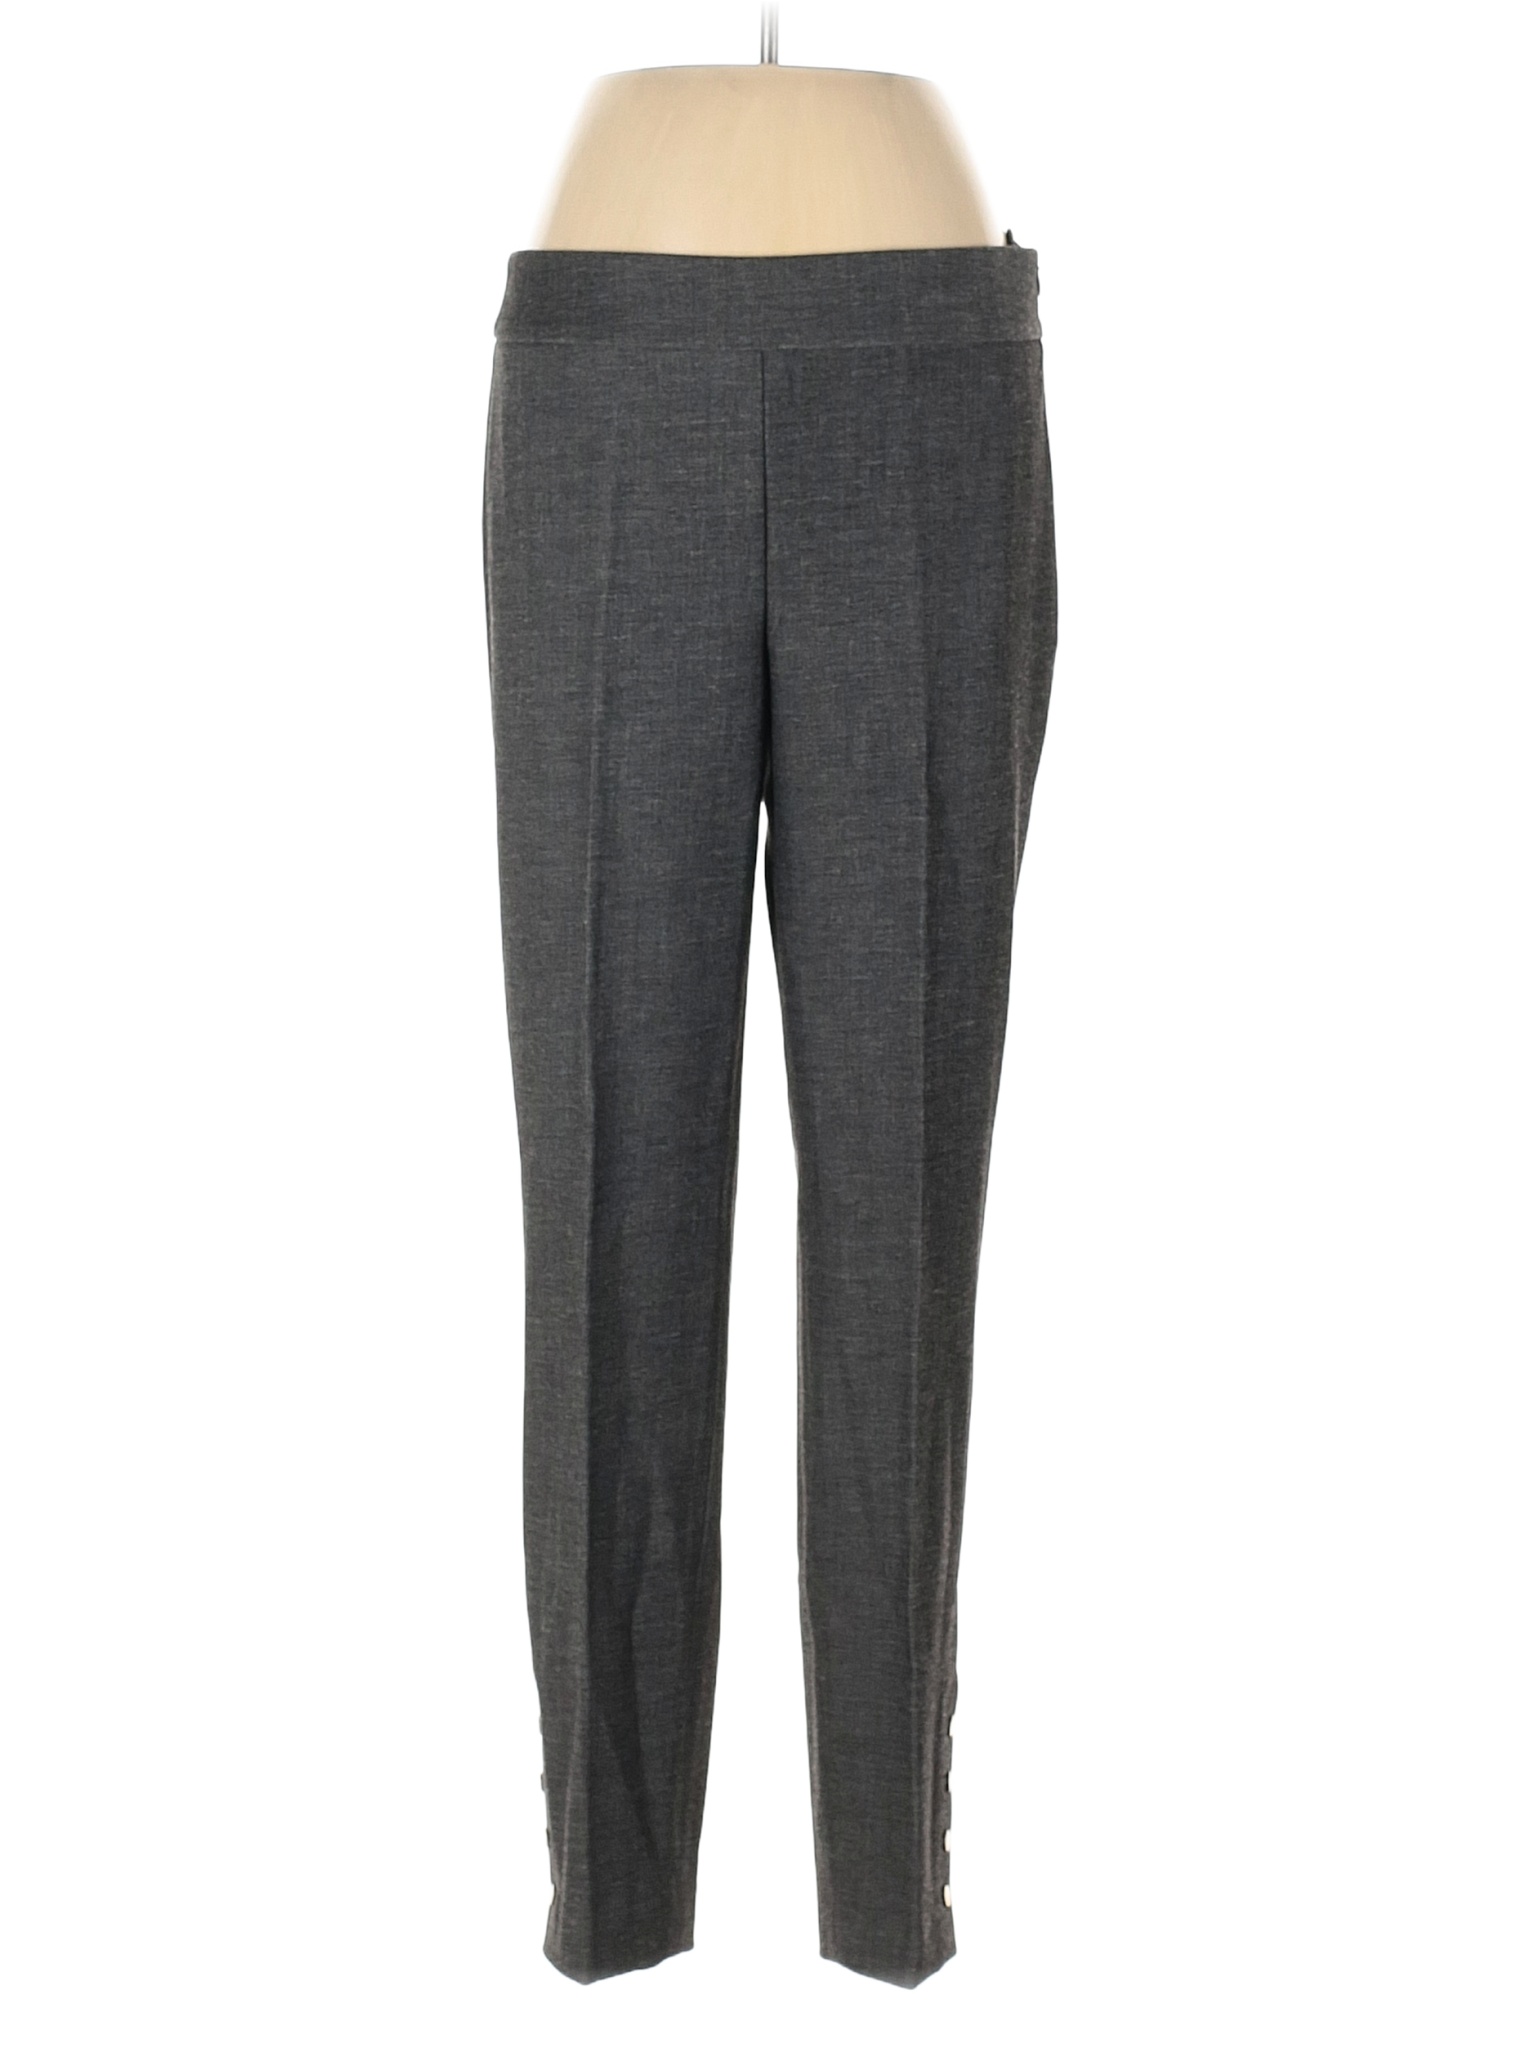 Talbots Solid Gray Dress Pants Size 8 - 84% off | thredUP